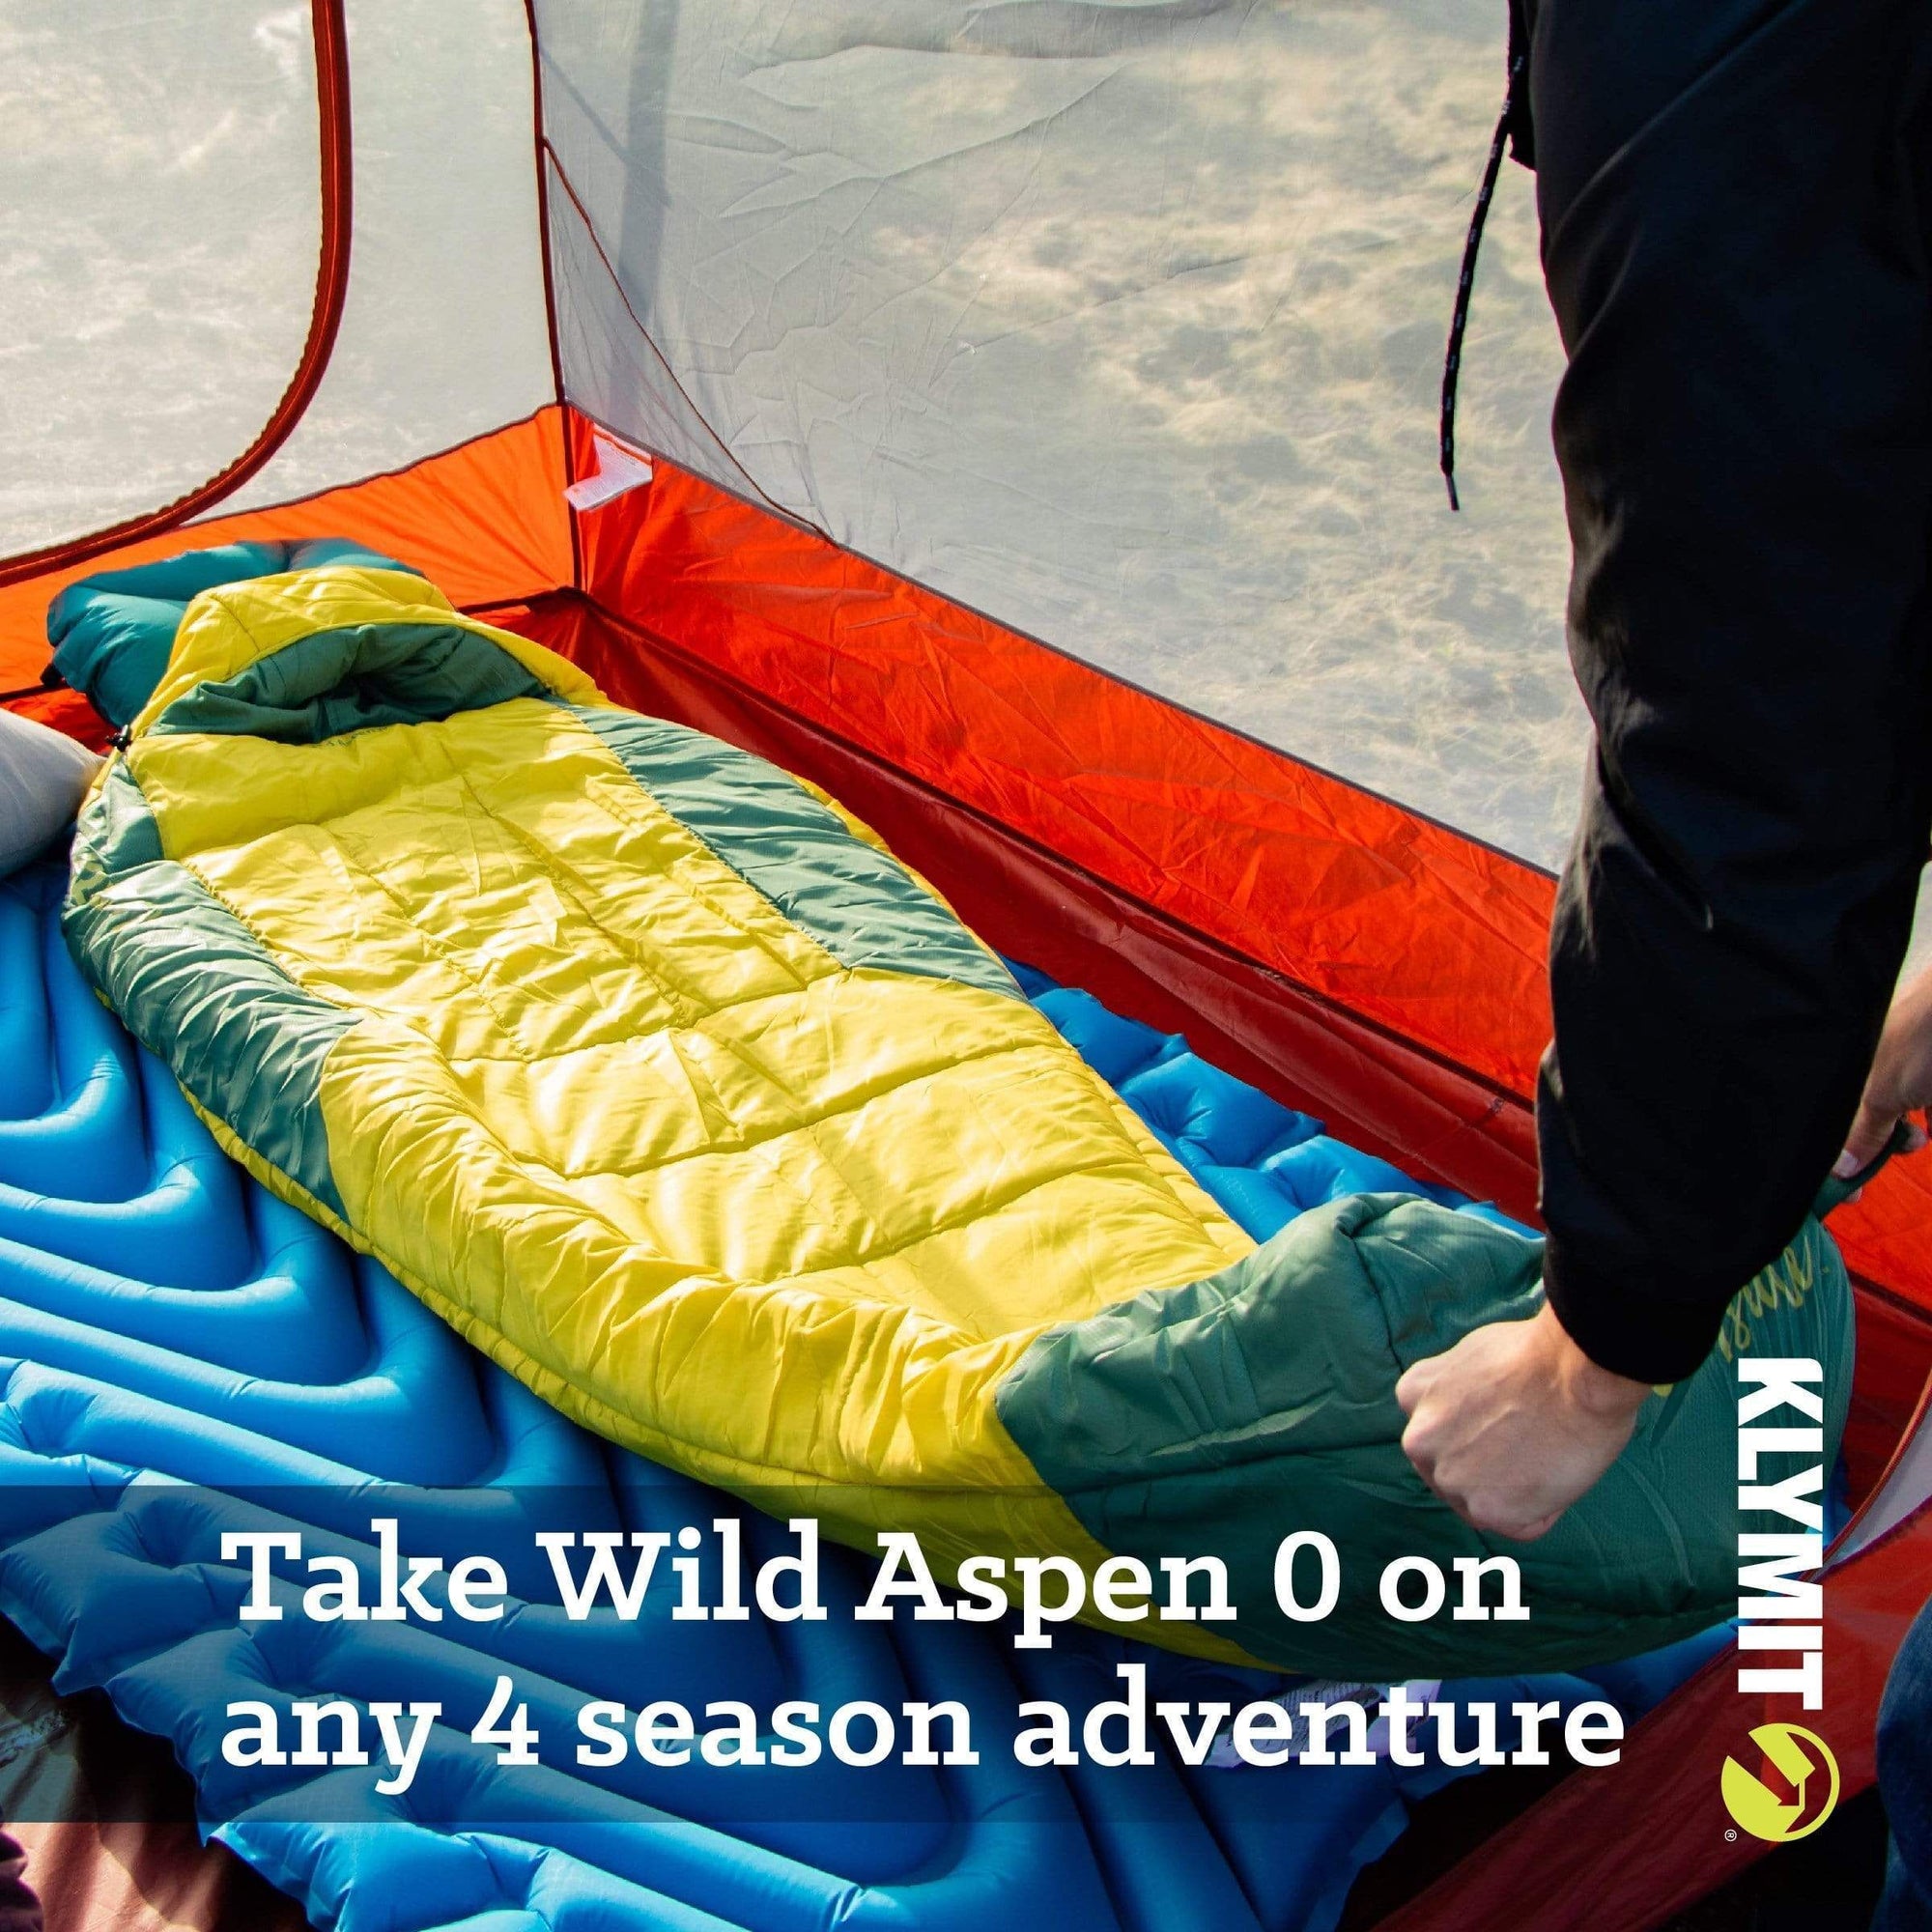 Klymit Camping Gear Large Wild Aspen 0 Sleeping Bags by Klymit